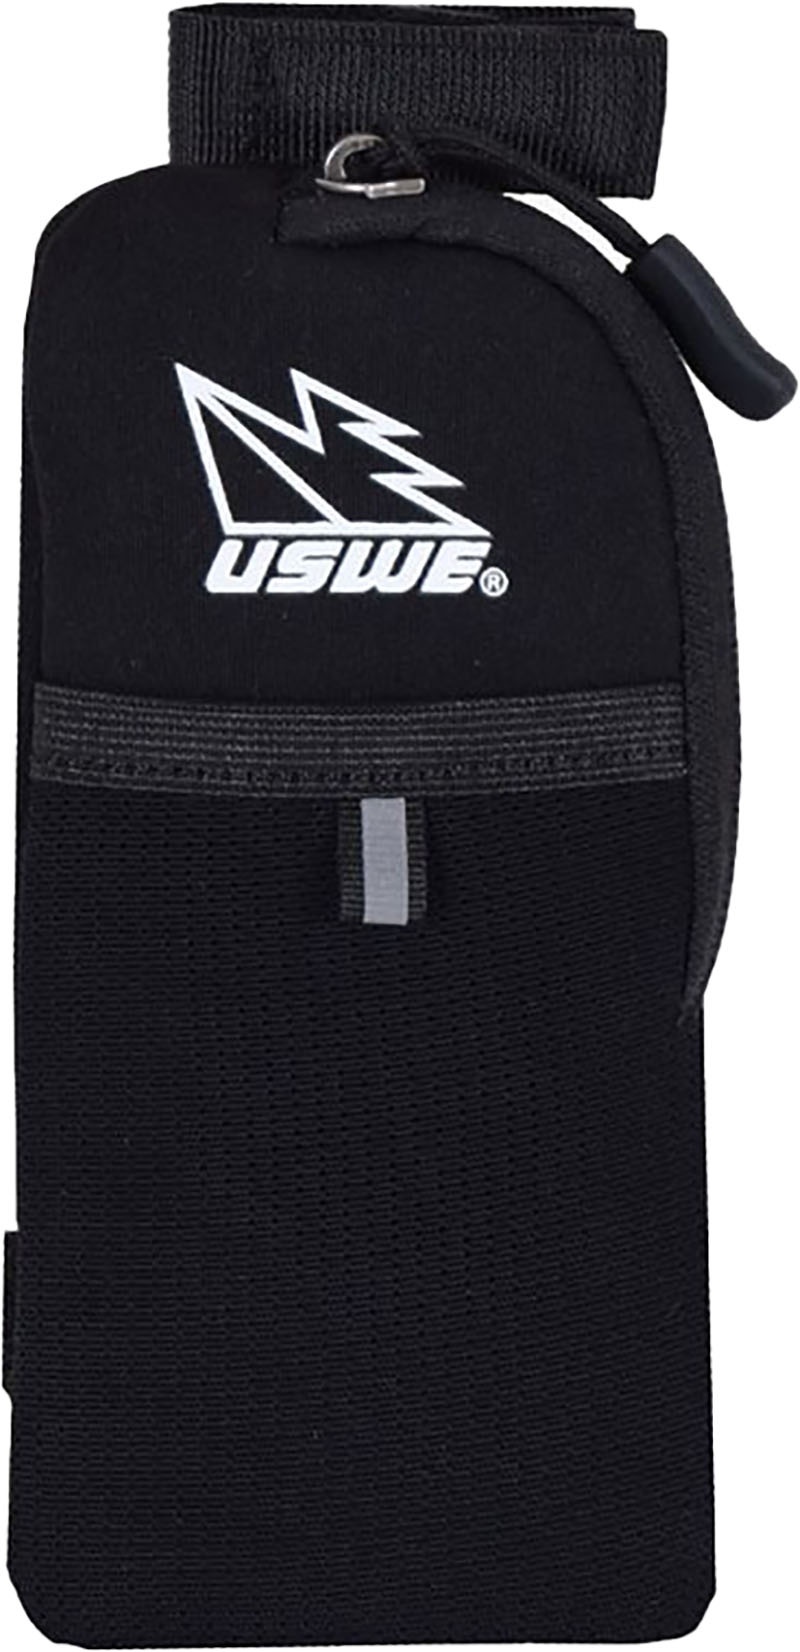 Tilbehør - Cykeltasker - Tilbehør til cykeltasker - USWE Bag Phone Chest Pocket